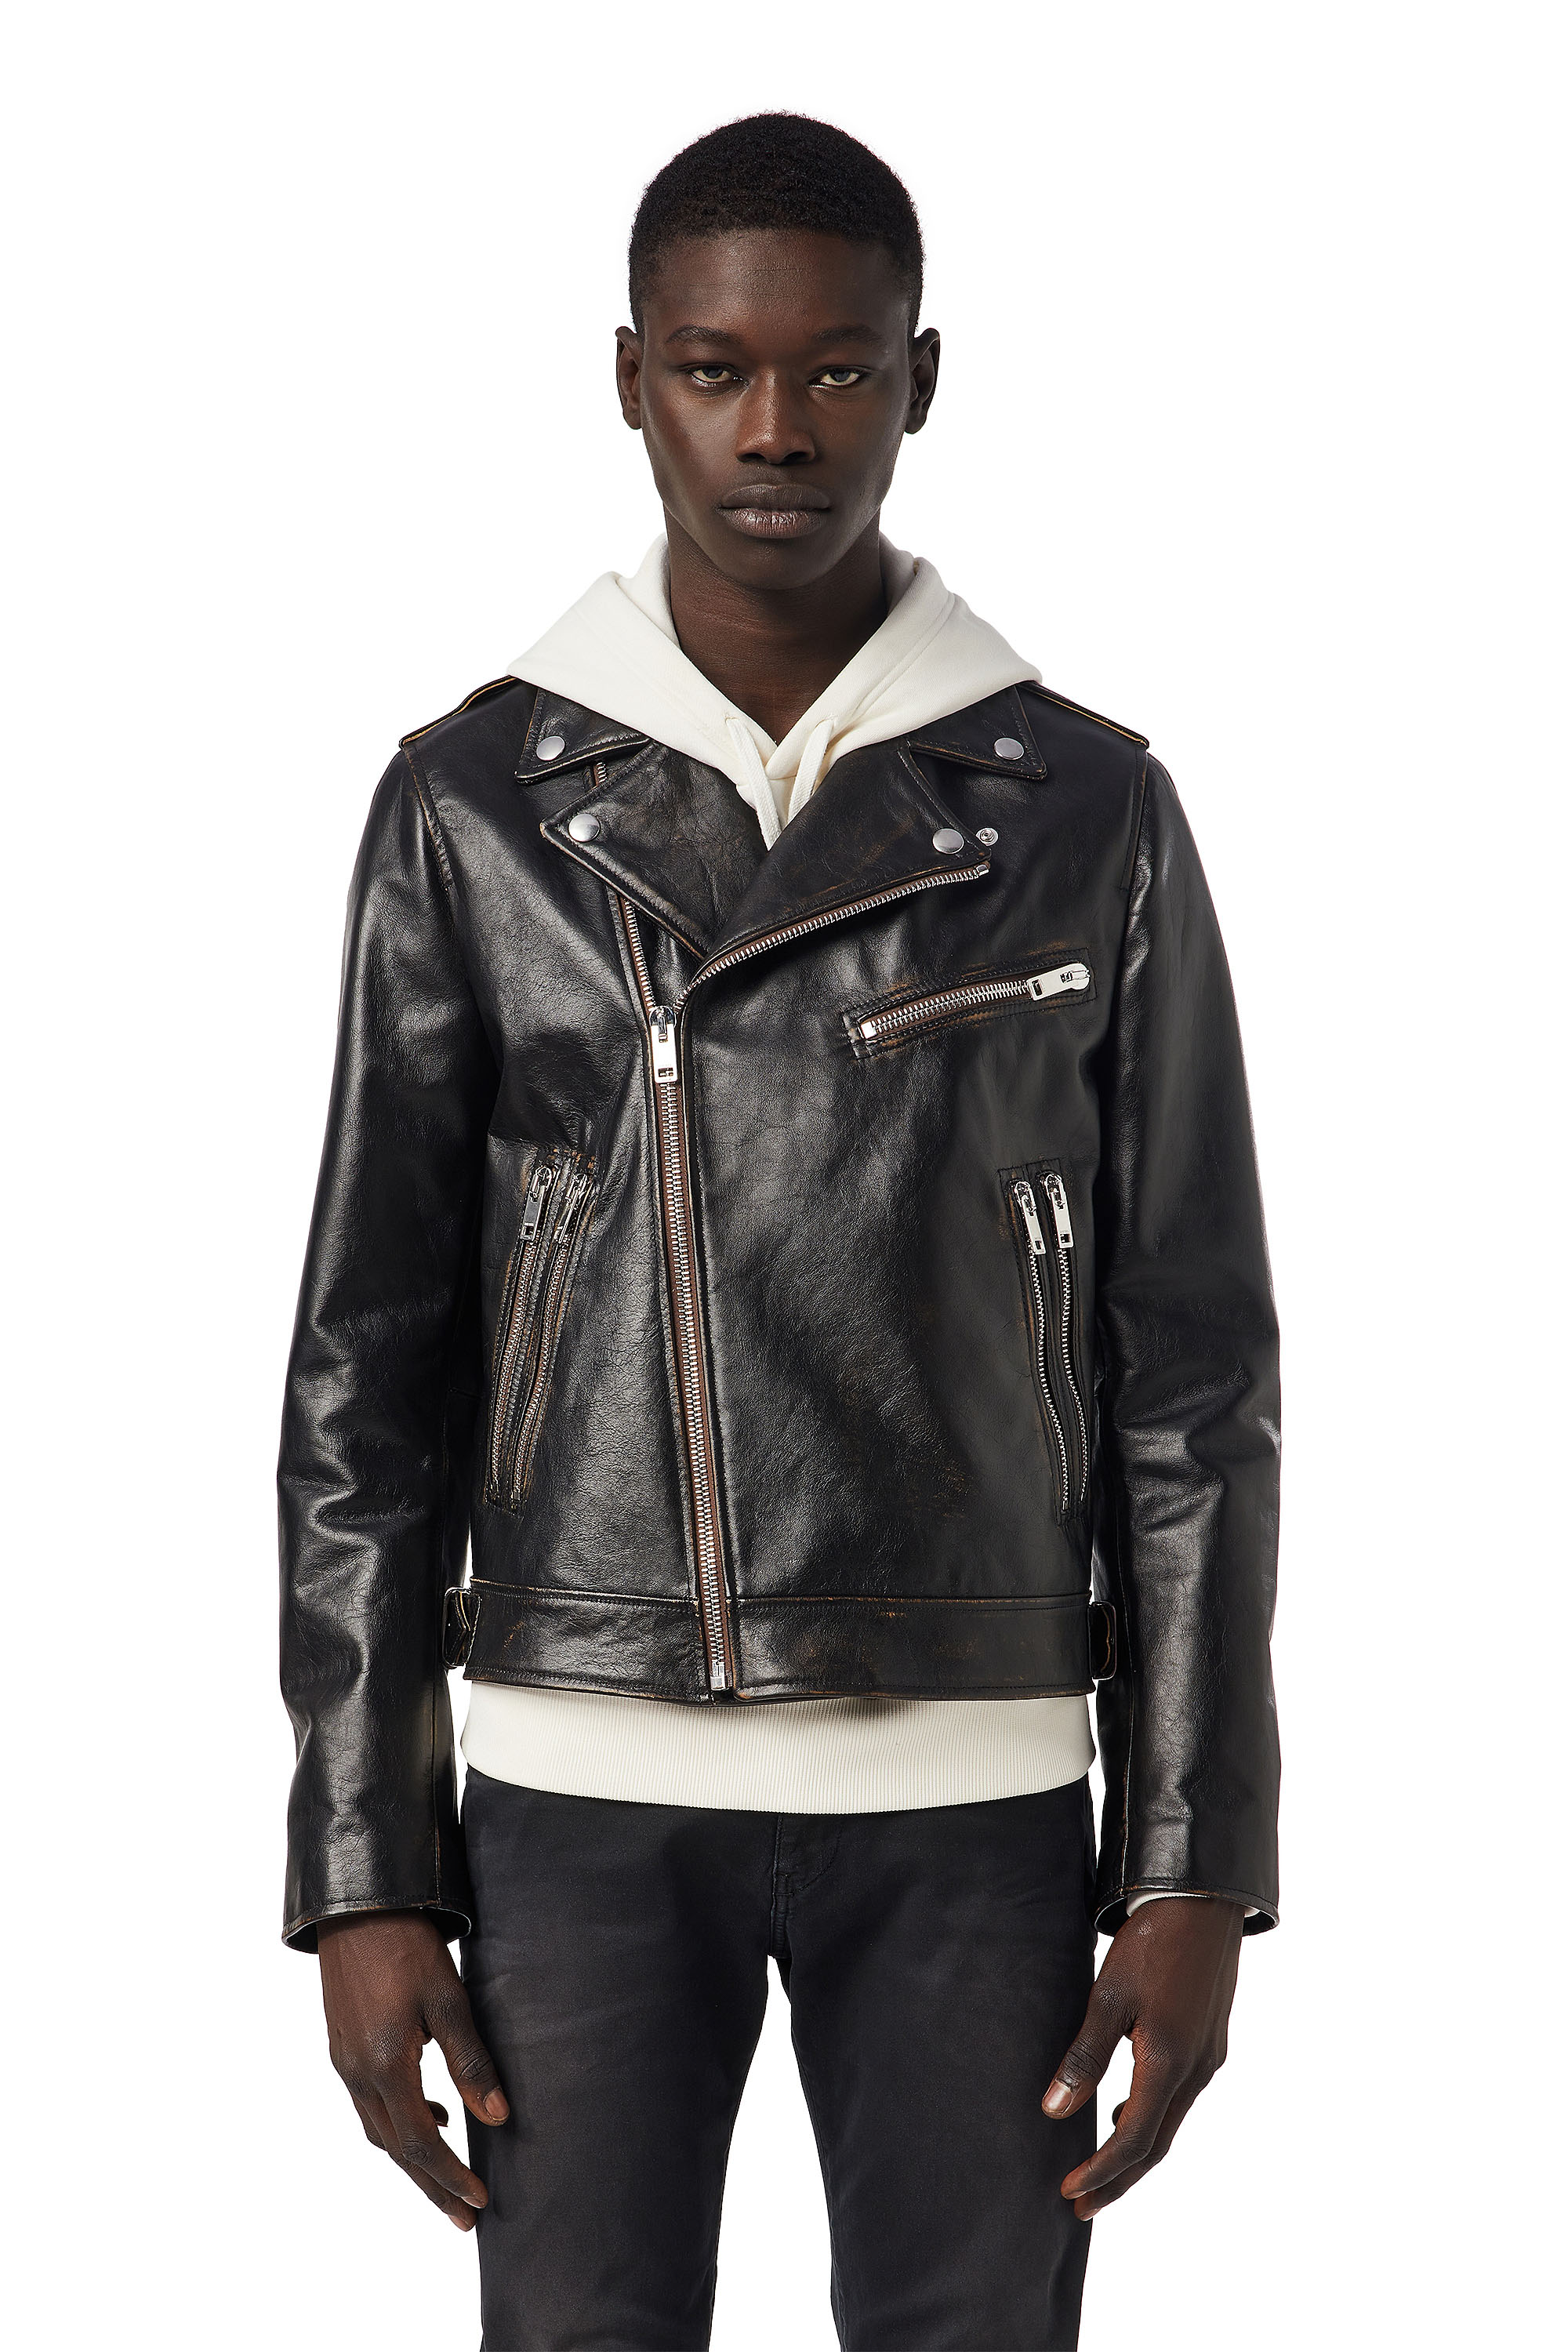 Men's Leather Jackets: Bomber, Motorcycle, Biker | Diesel